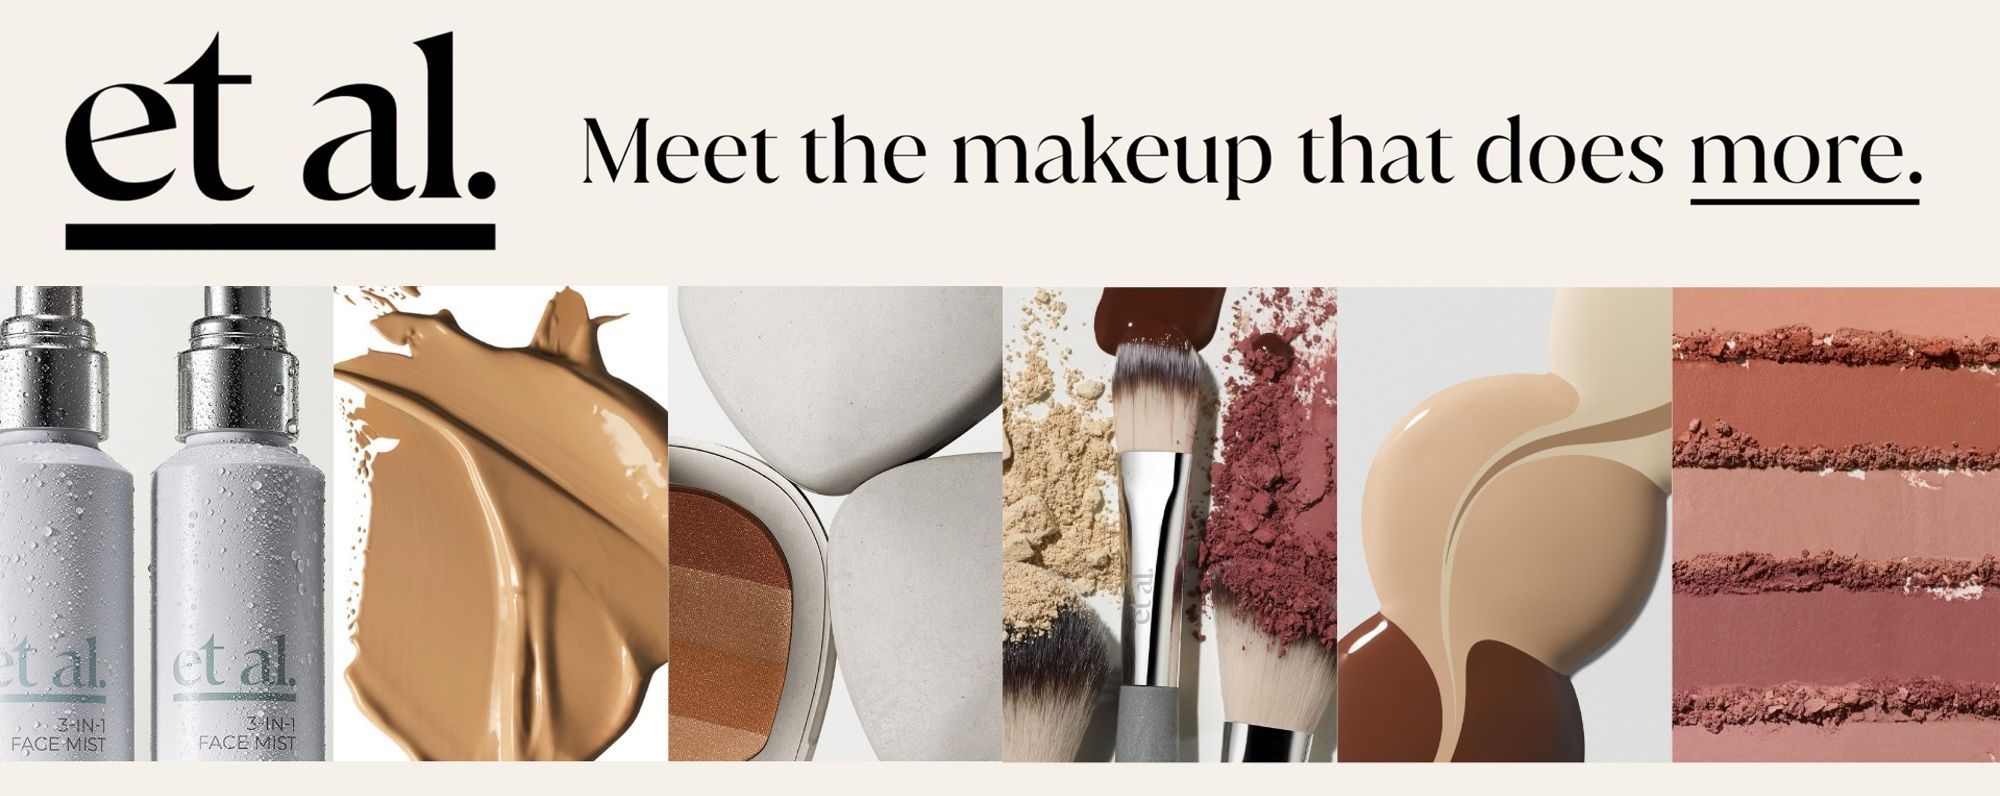 Et al. Makeup - Meet the makeup that does more at Catherine's Laser & Beauty Salon, Letterkenny